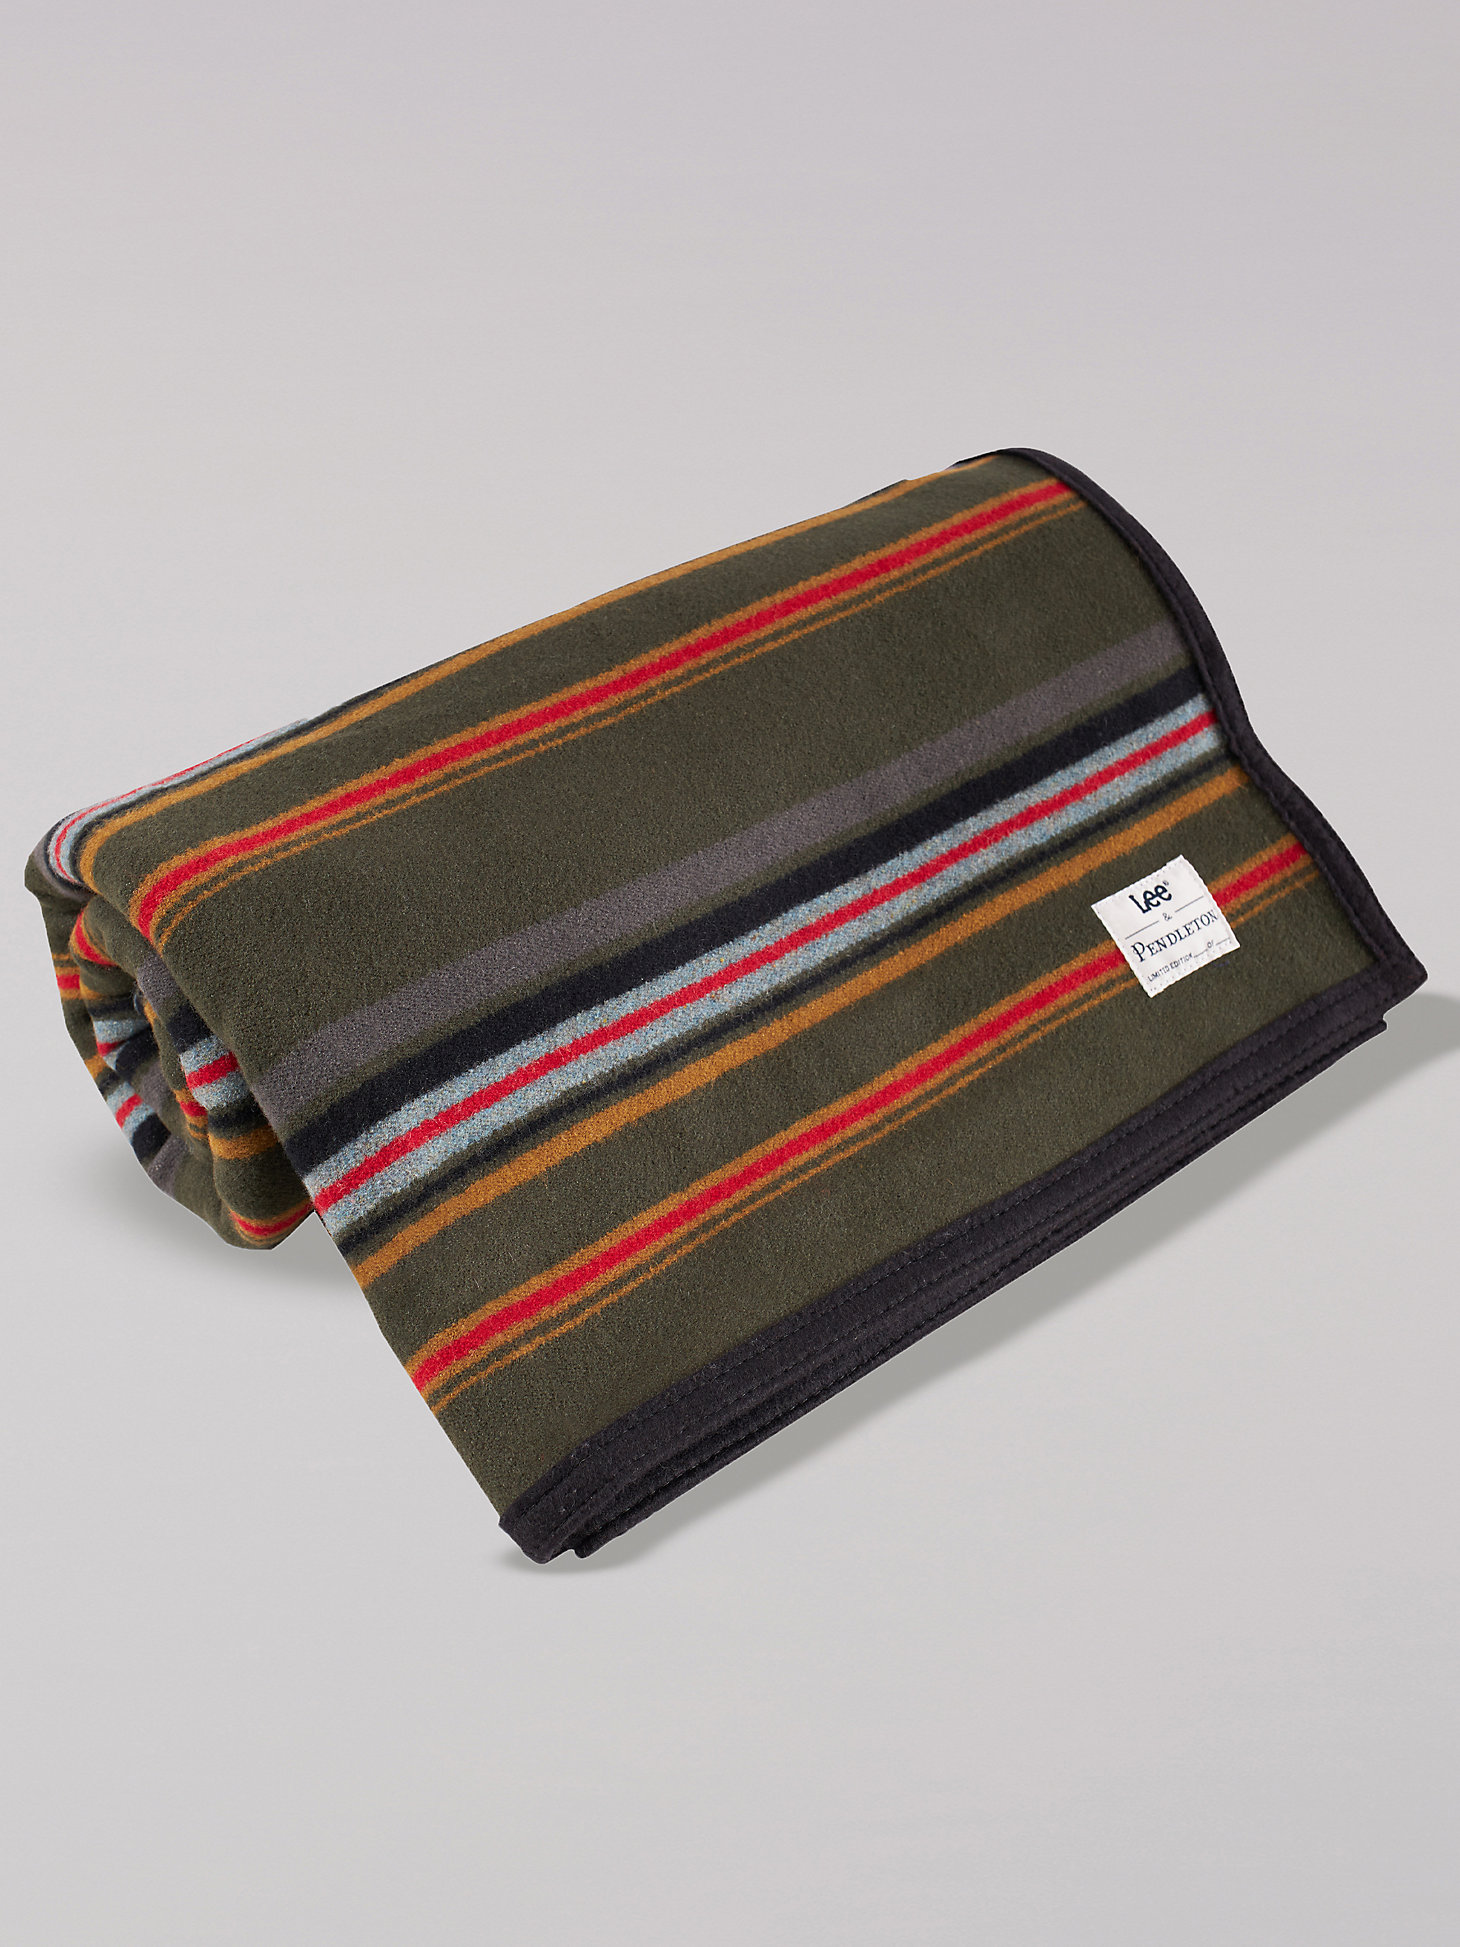 Lee Pendleton Wool Blanket:Striped:ONE SIZE alternative view 1